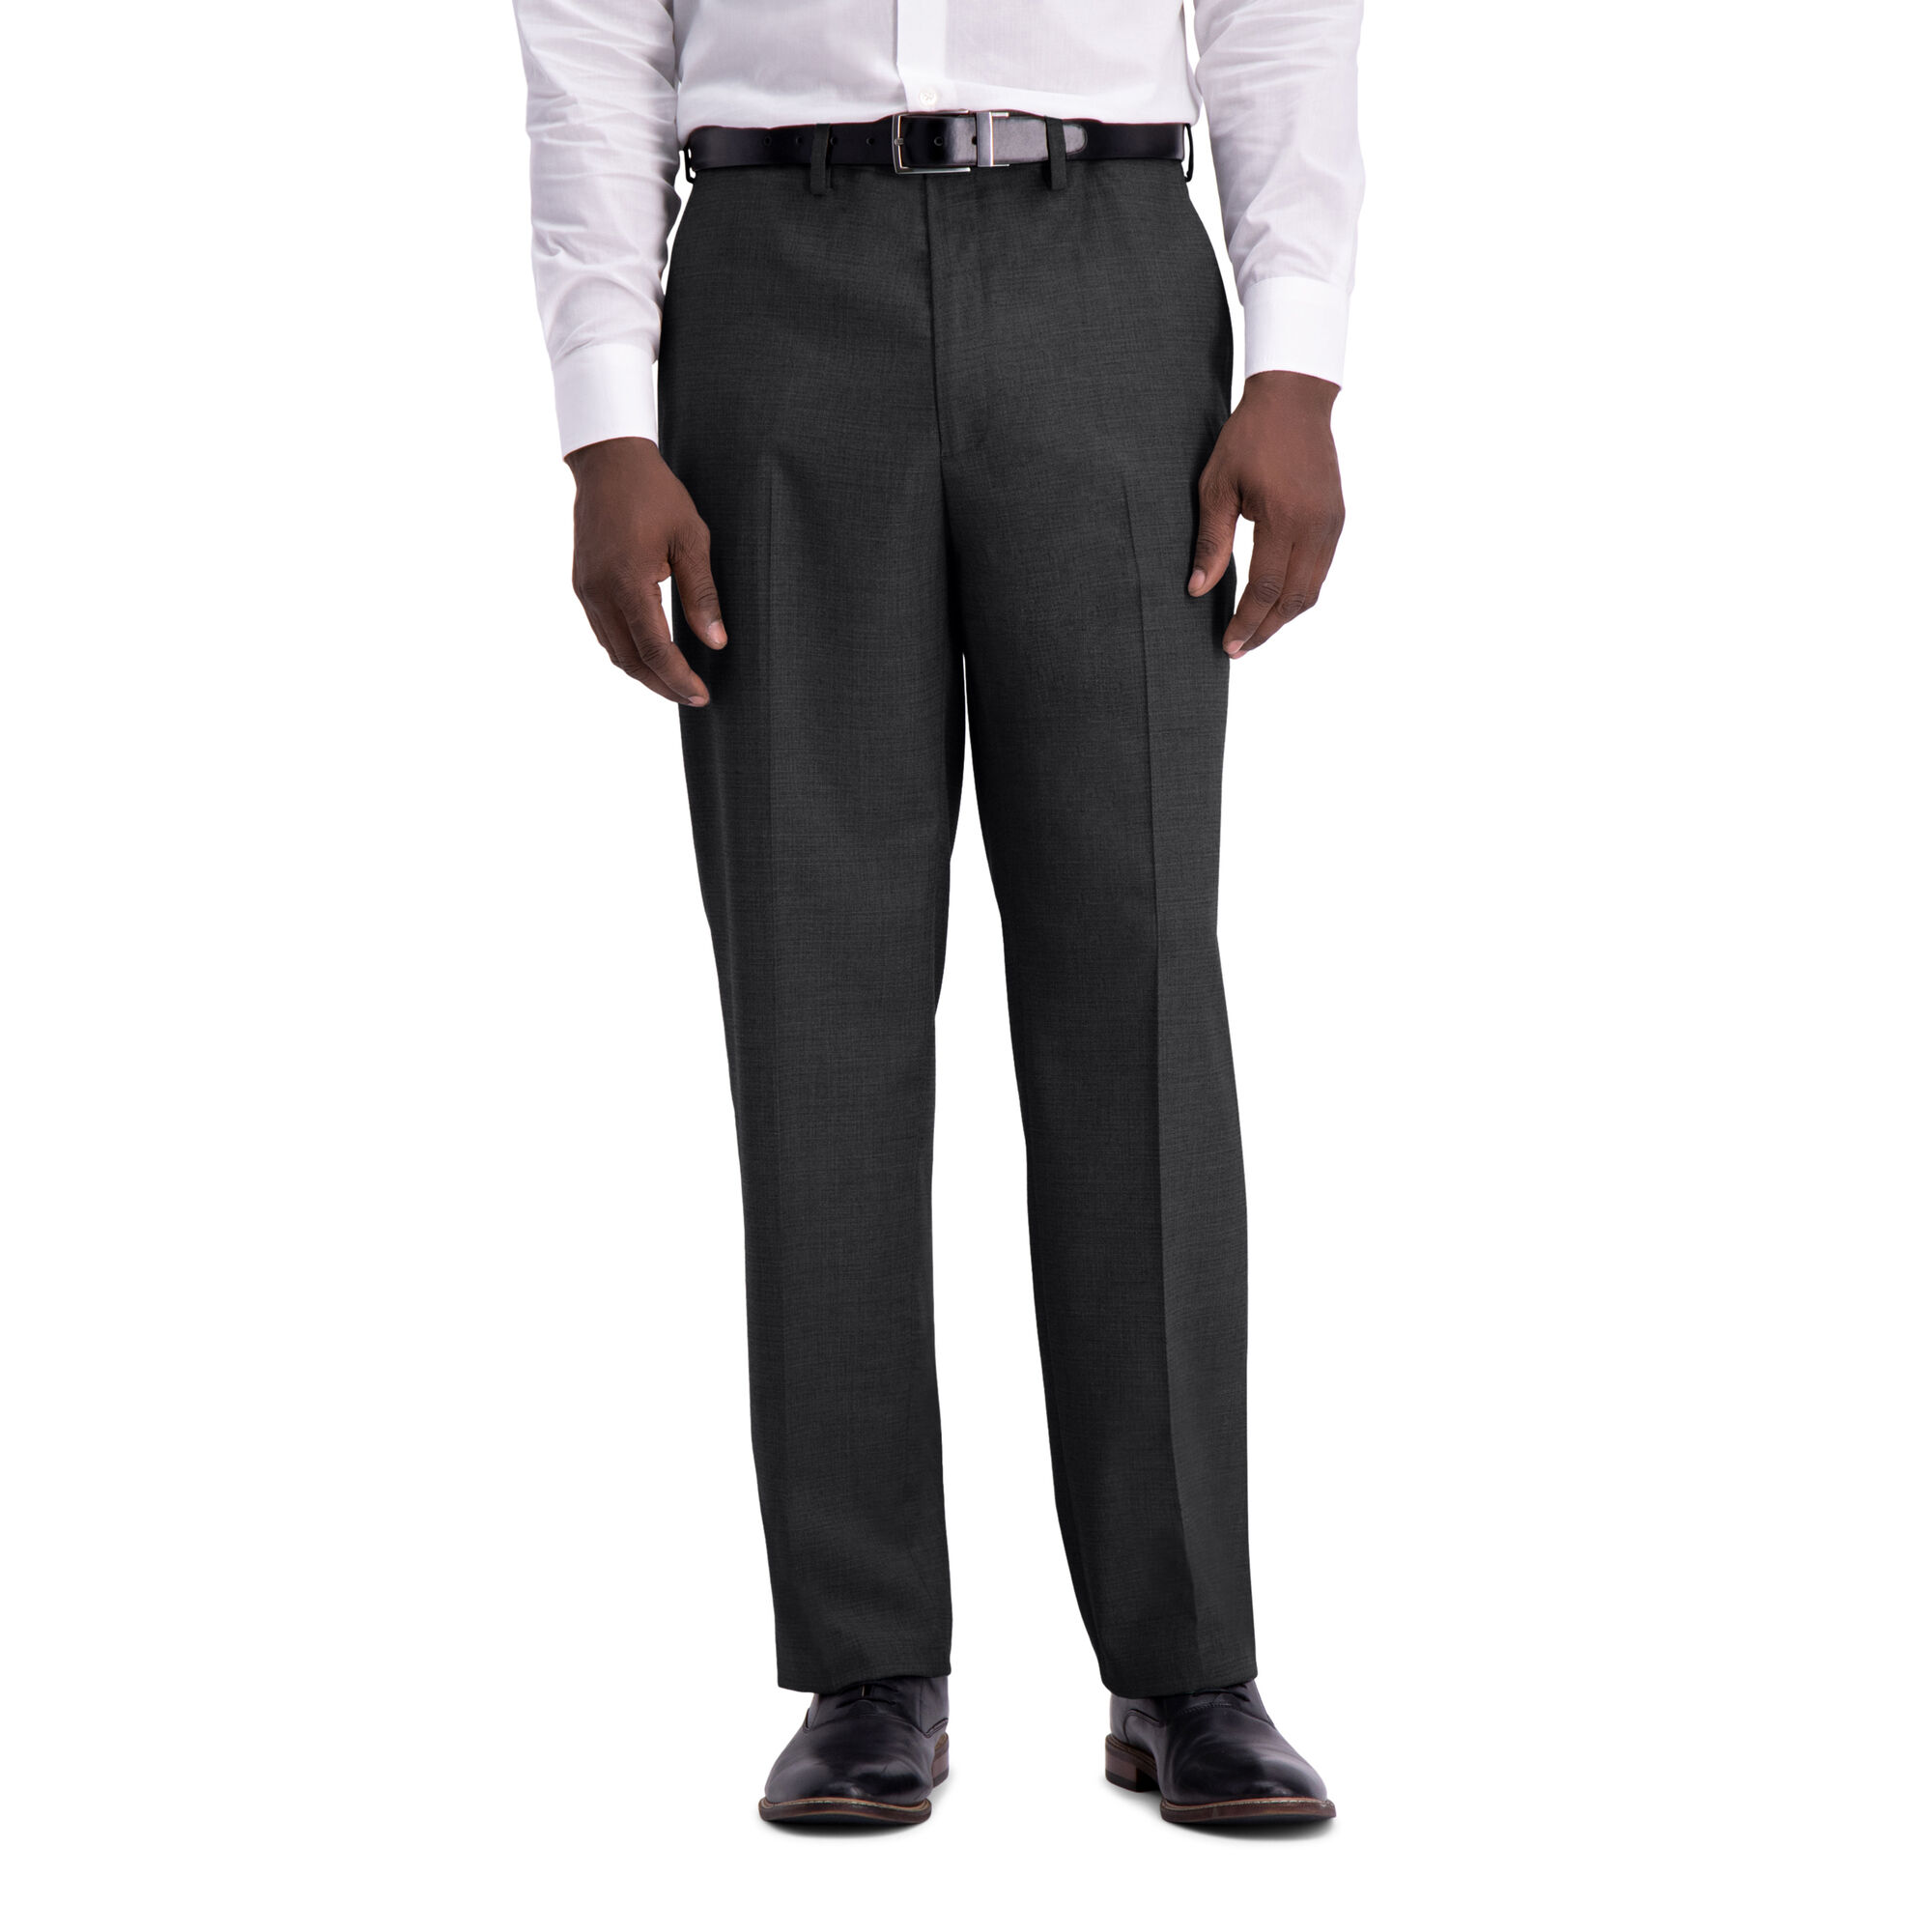 J.M. Haggar Texture Weave Suit Pant Charcoal Htr (HY00314 Clothing Pants) photo